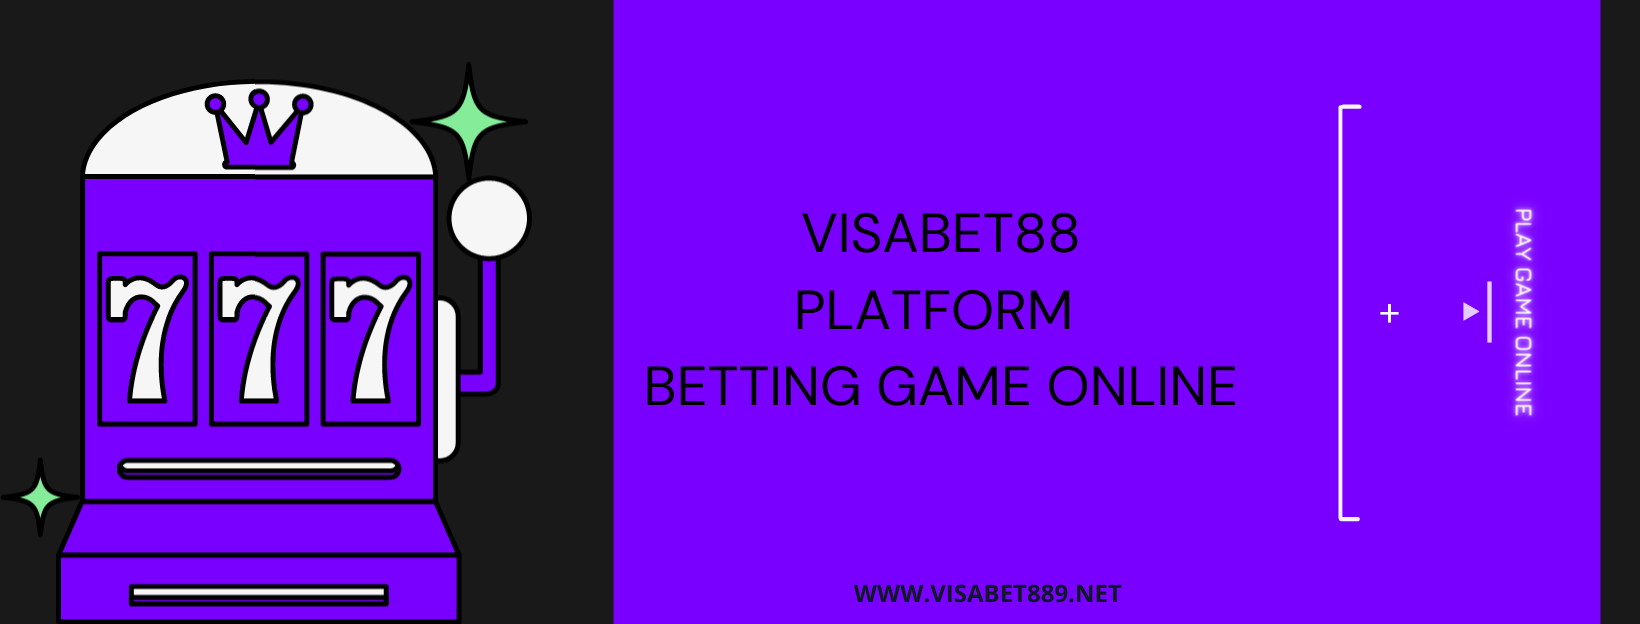 poker casino Visabet88